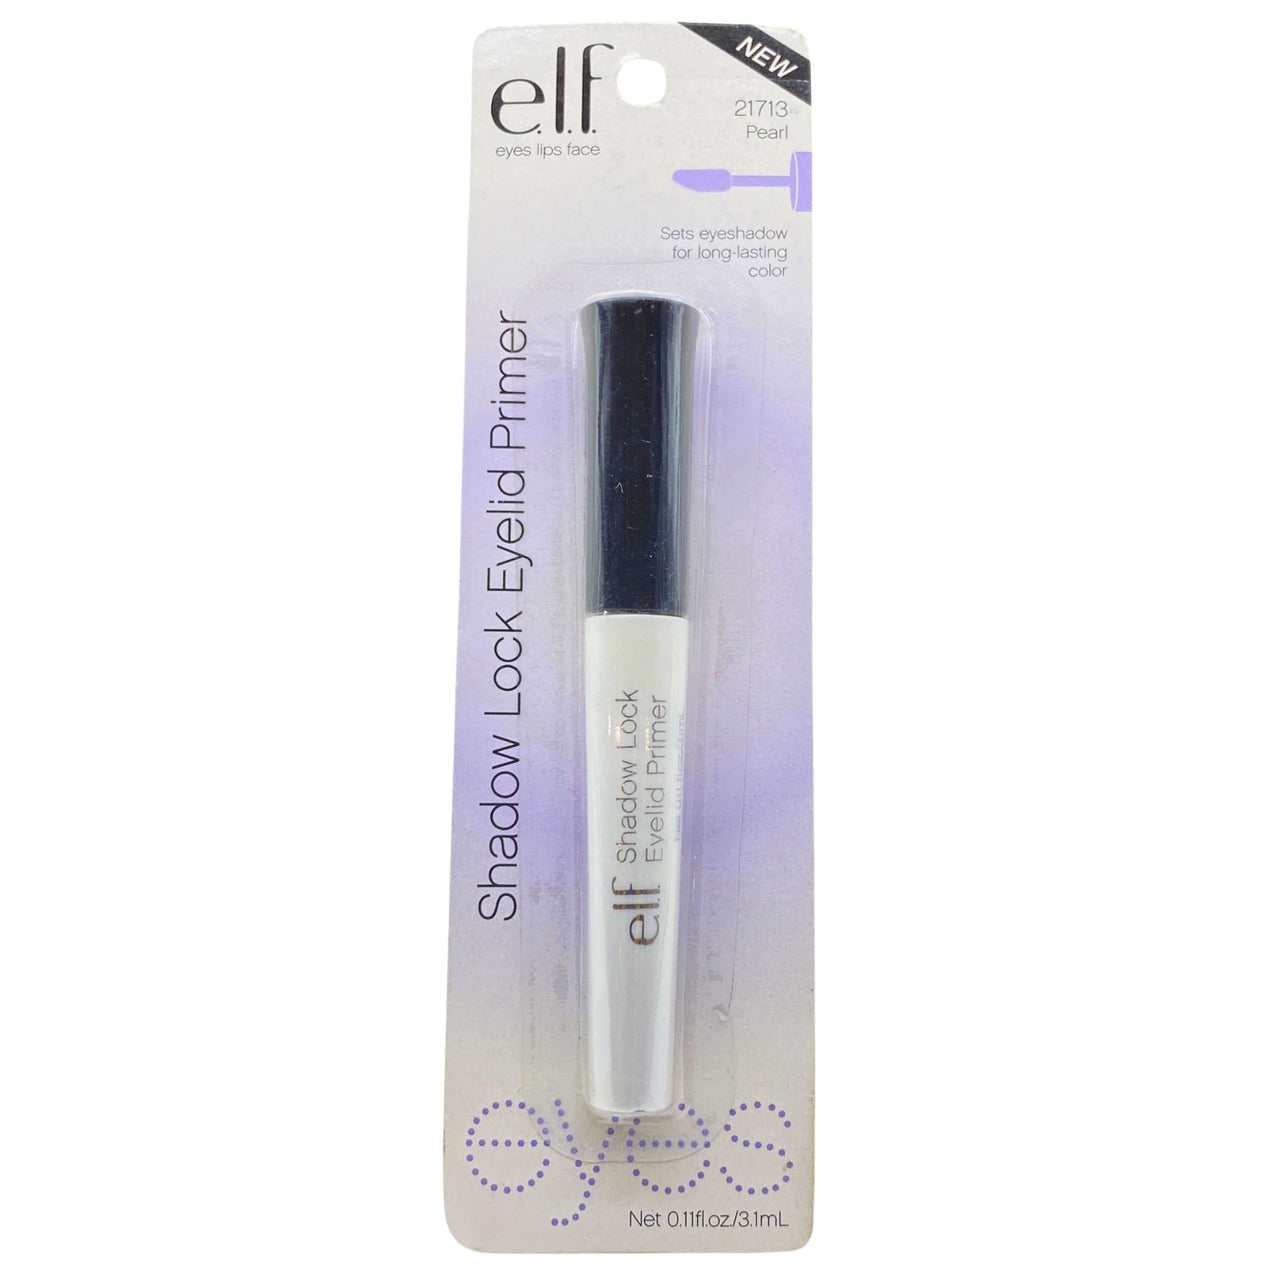 ELF Shadow Lock Eyelid Primer Sets Eyeshadow for Long Lasting Color Pearl